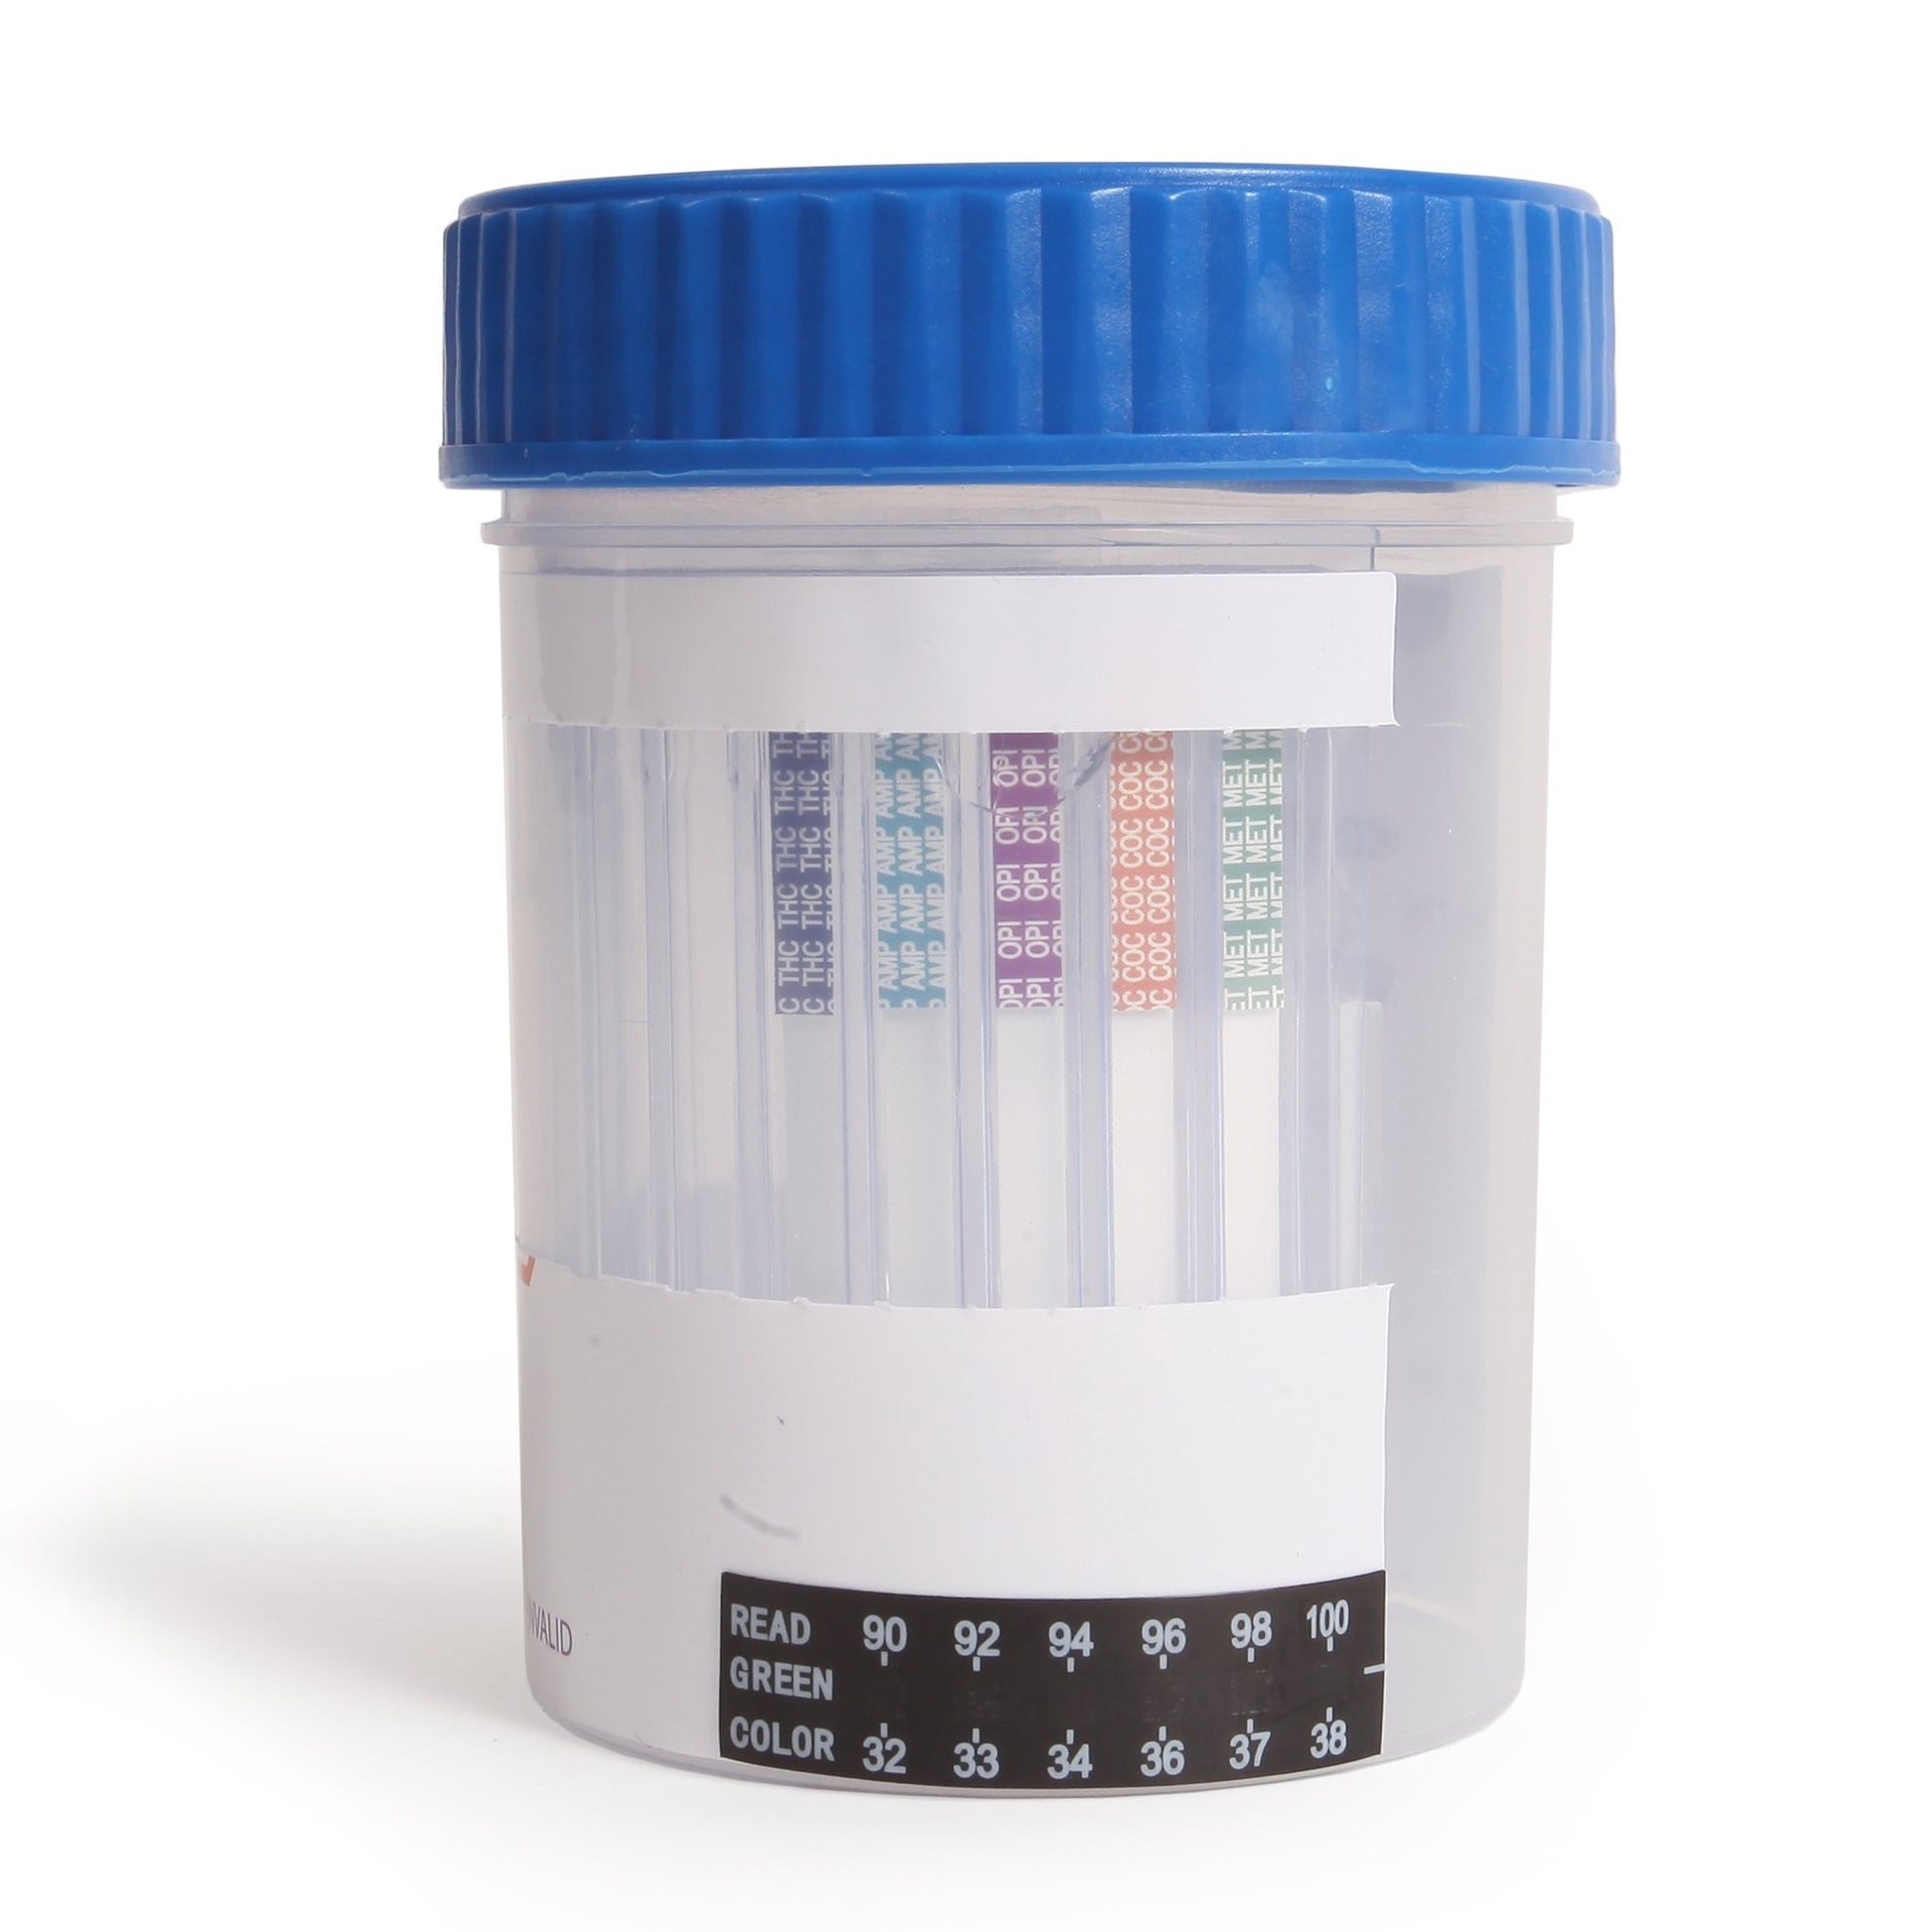 Healgen 12 Panel Drug Cup Tests - Verséa Diagnostics